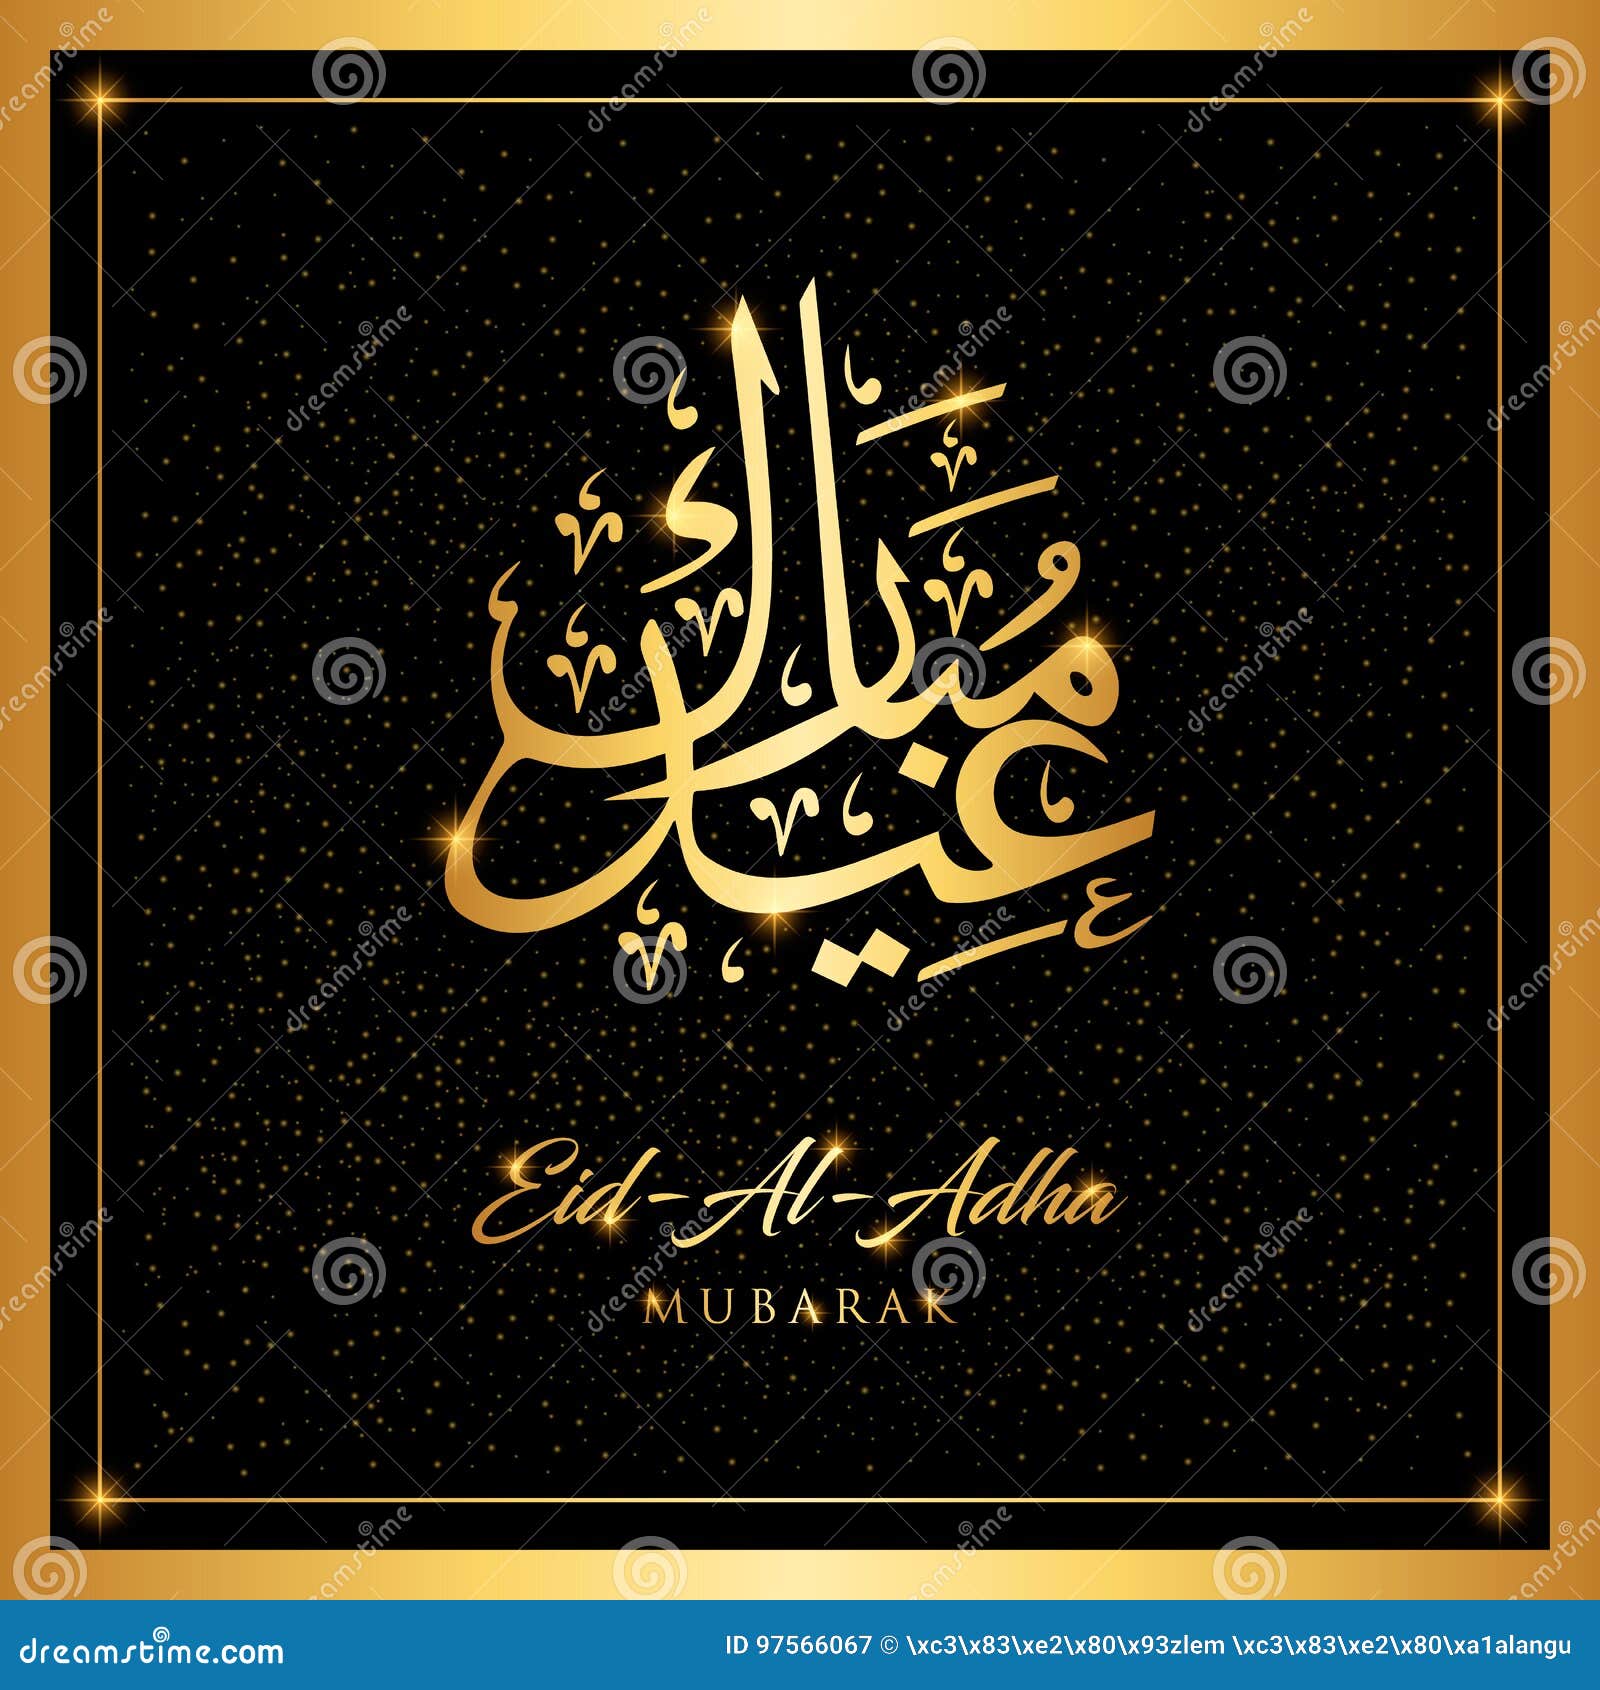 eid-al-adha mubarak  